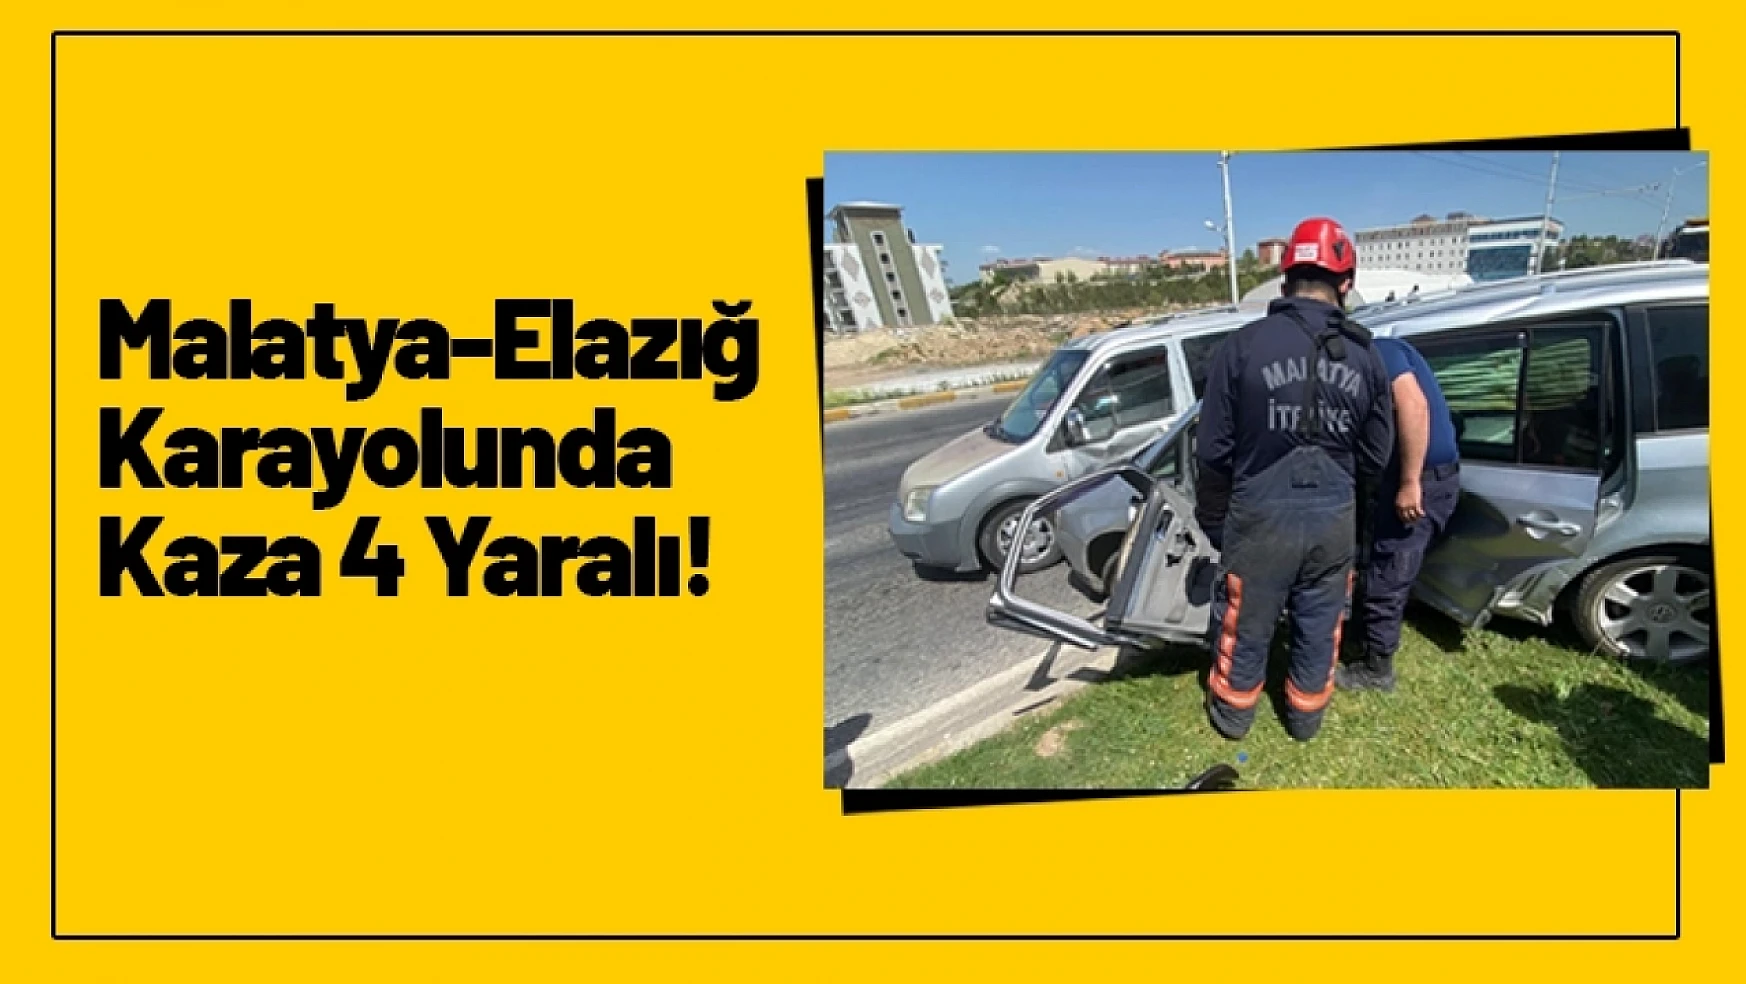 Malatya Elazığ karayolunda kaza 4 Yaralı!